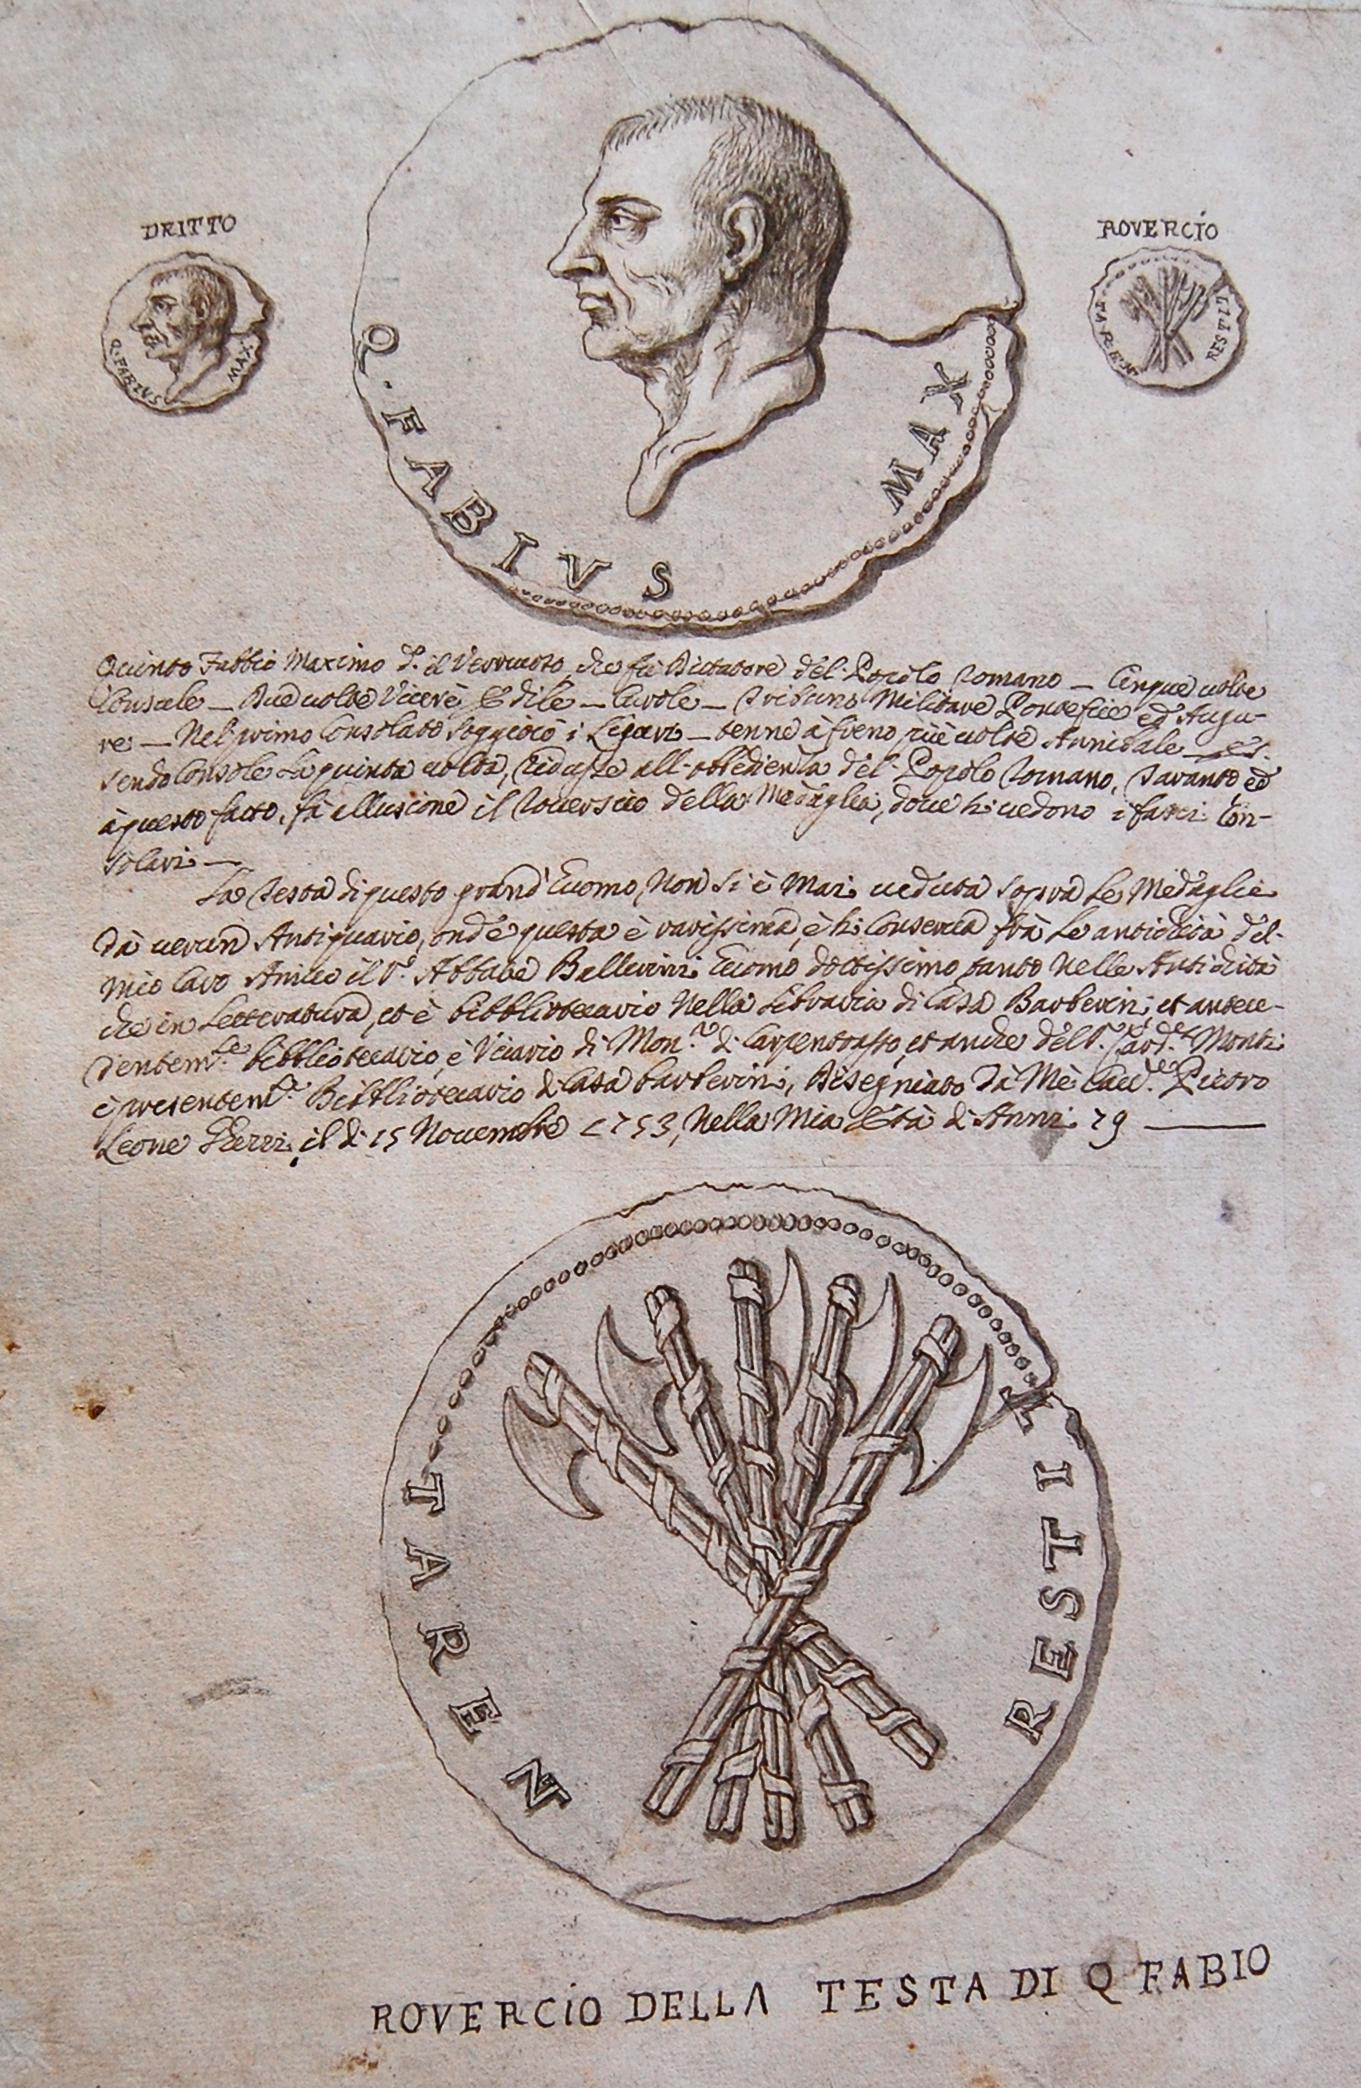 18th century drawing